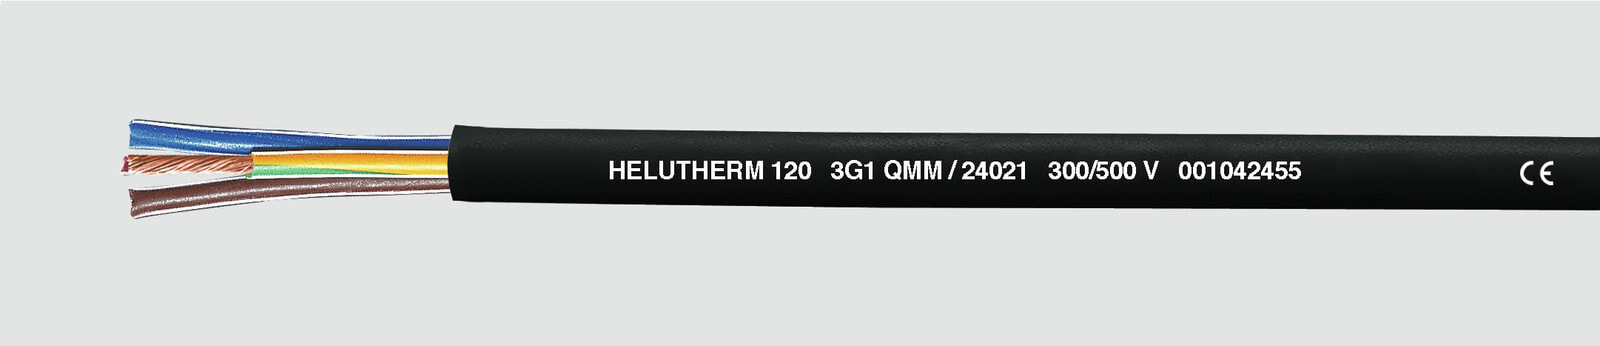 Helukabel 24022 - Low voltage cable - Black - Polyvinyl chloride (PVC) - Cooper - 1 mm² - 38 kg/km